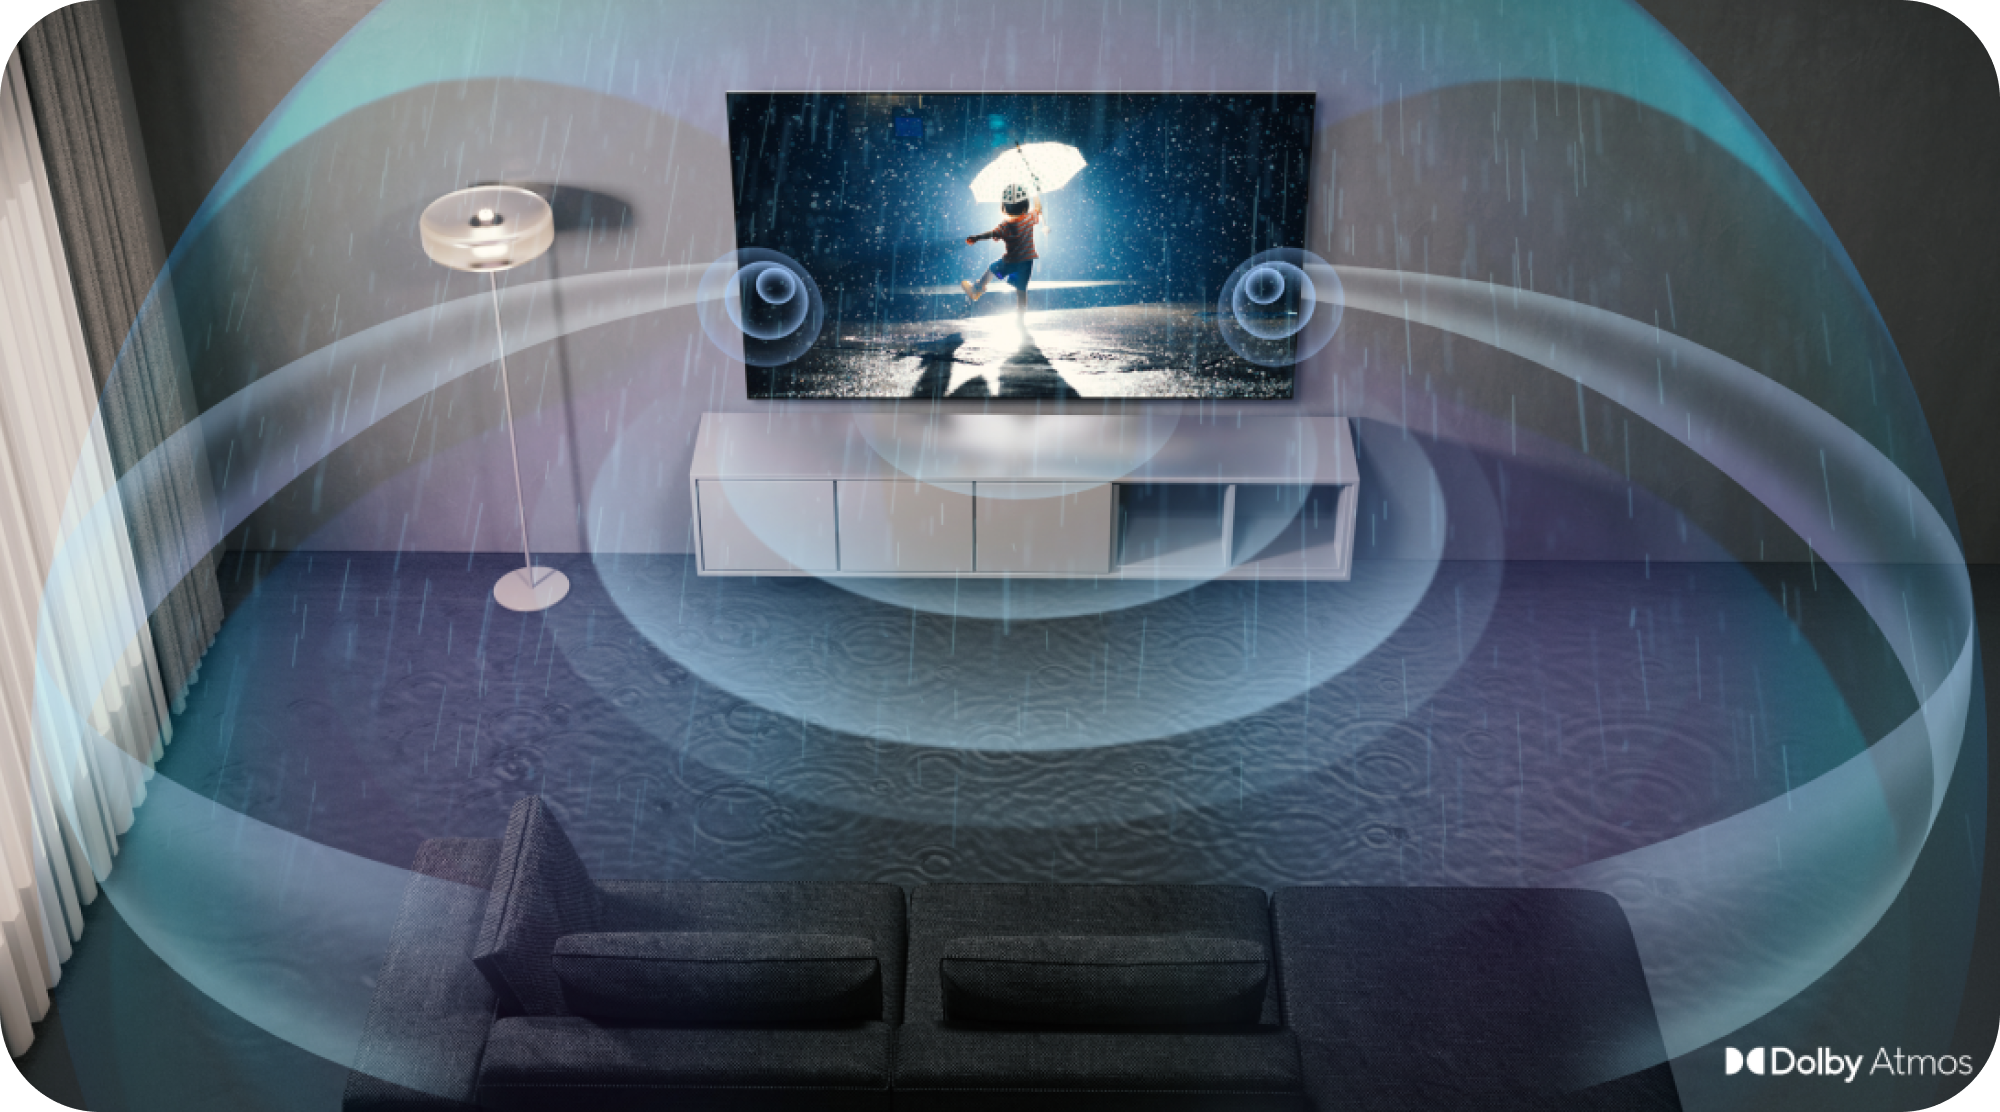 Samsung TV med Dolby Atmos og lydbølger rundt i rommet